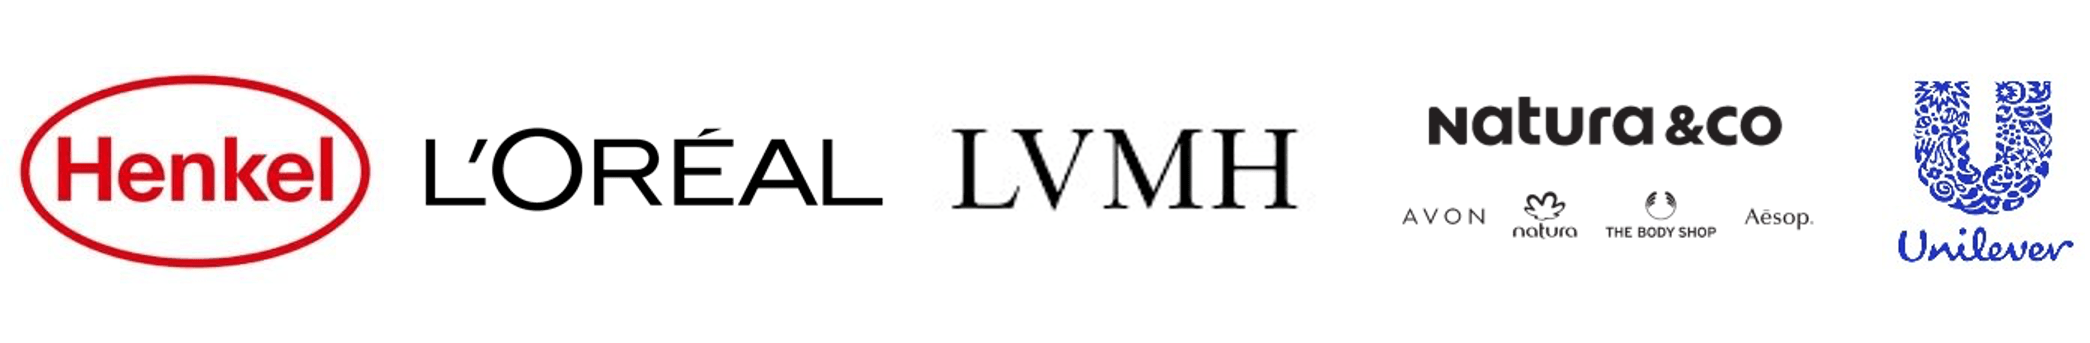 20 years of environmental responsibility - LVMH